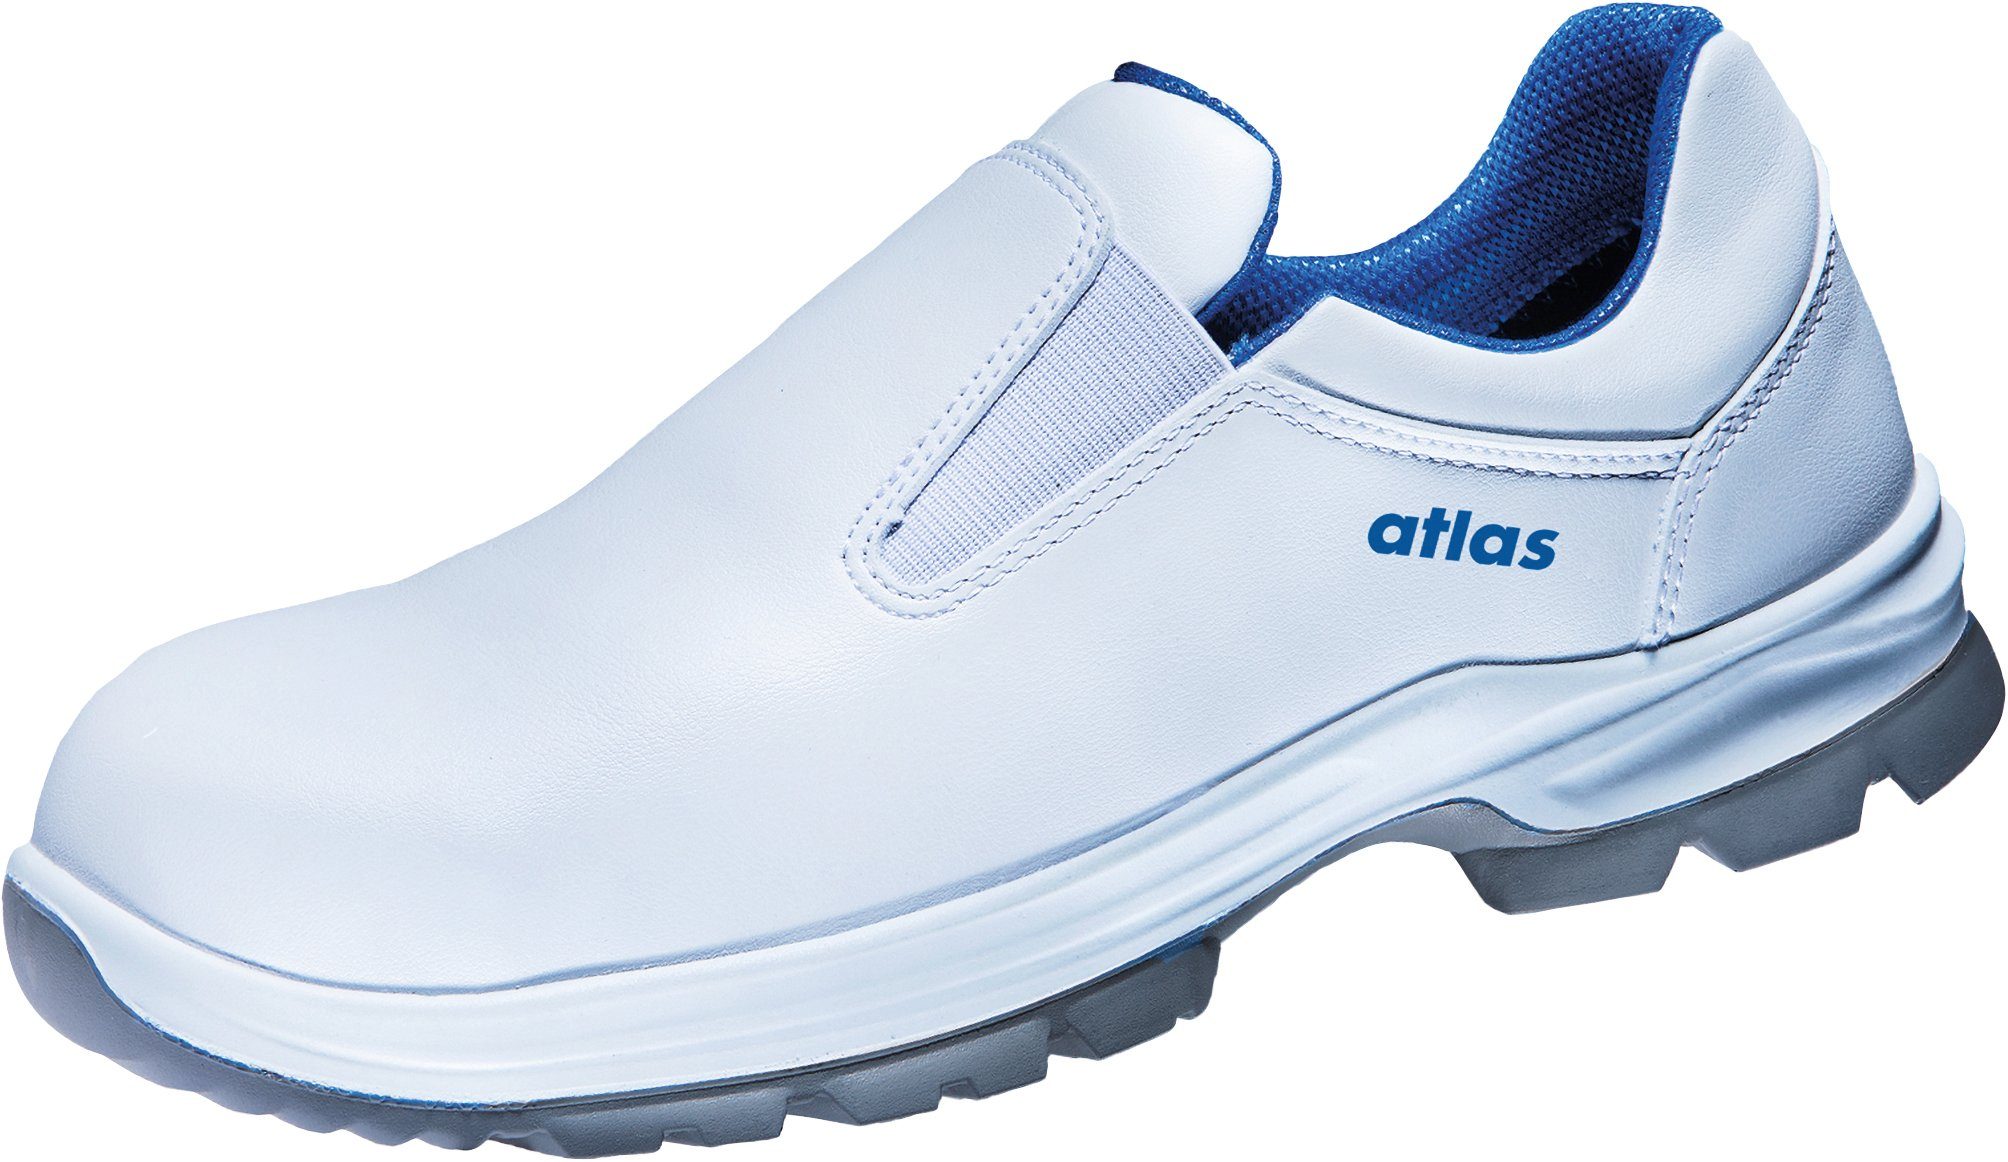 Atlas Schuhe Sneaker CL S2 ESD Arbeitsschuh 2.0 490